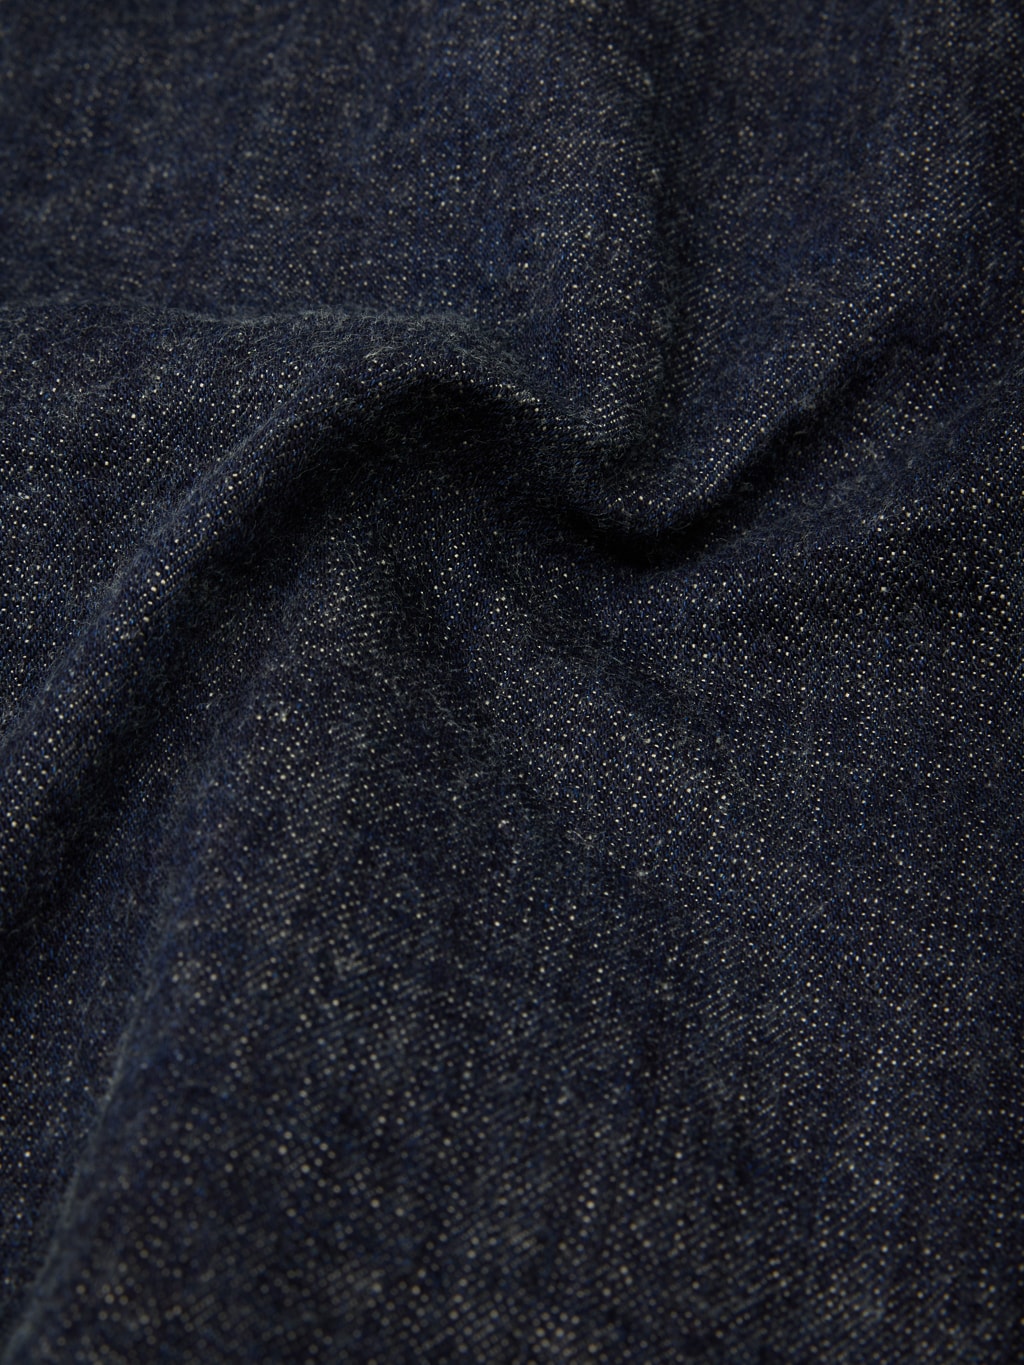 Tanuki zetto benkei type III jacket denim fabric